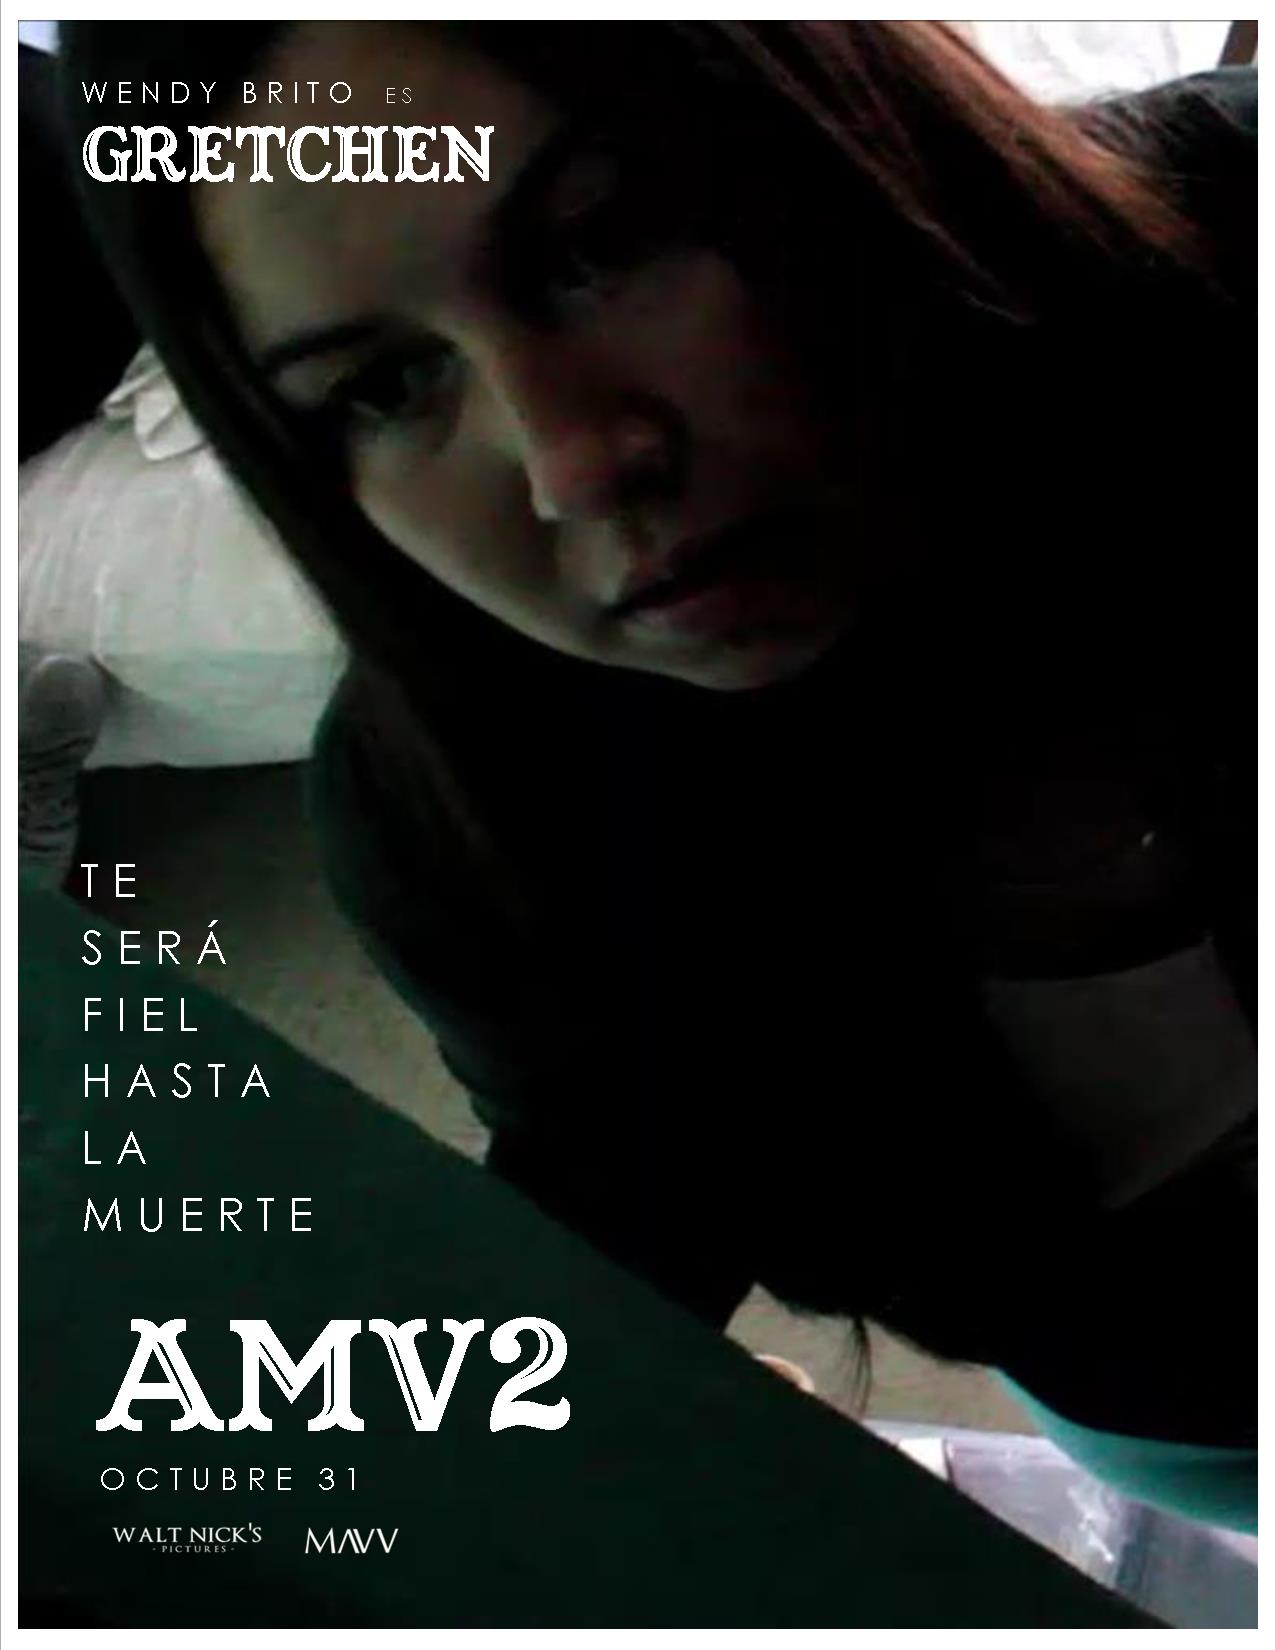 Póster #AMV2 - Gretchen (Octubre 22)